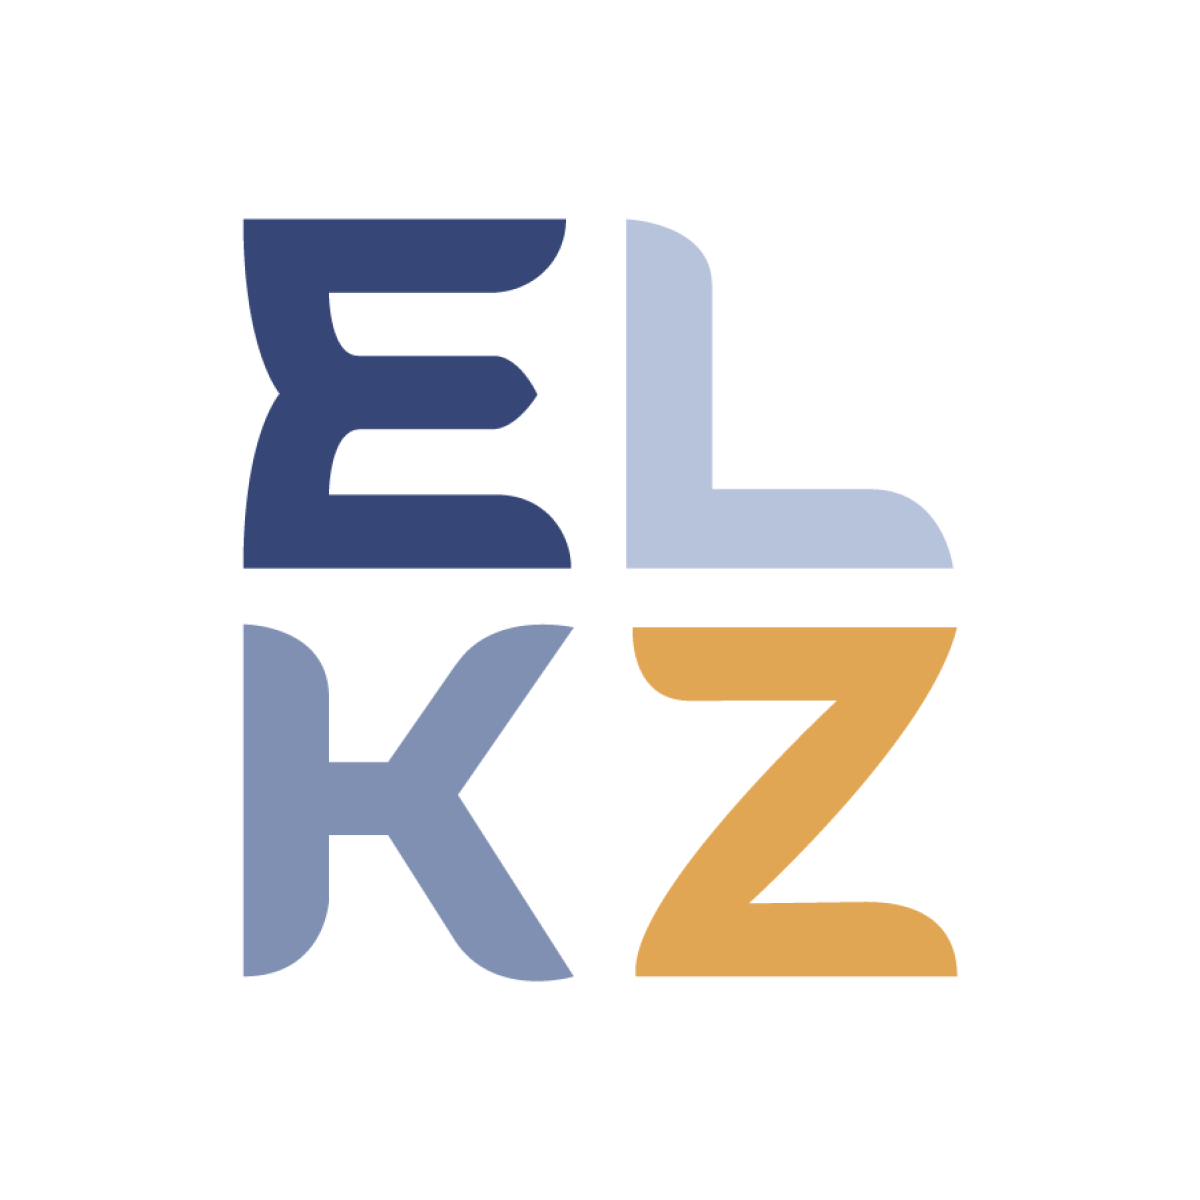 «Еl.kz» жаңа форматқа көшті